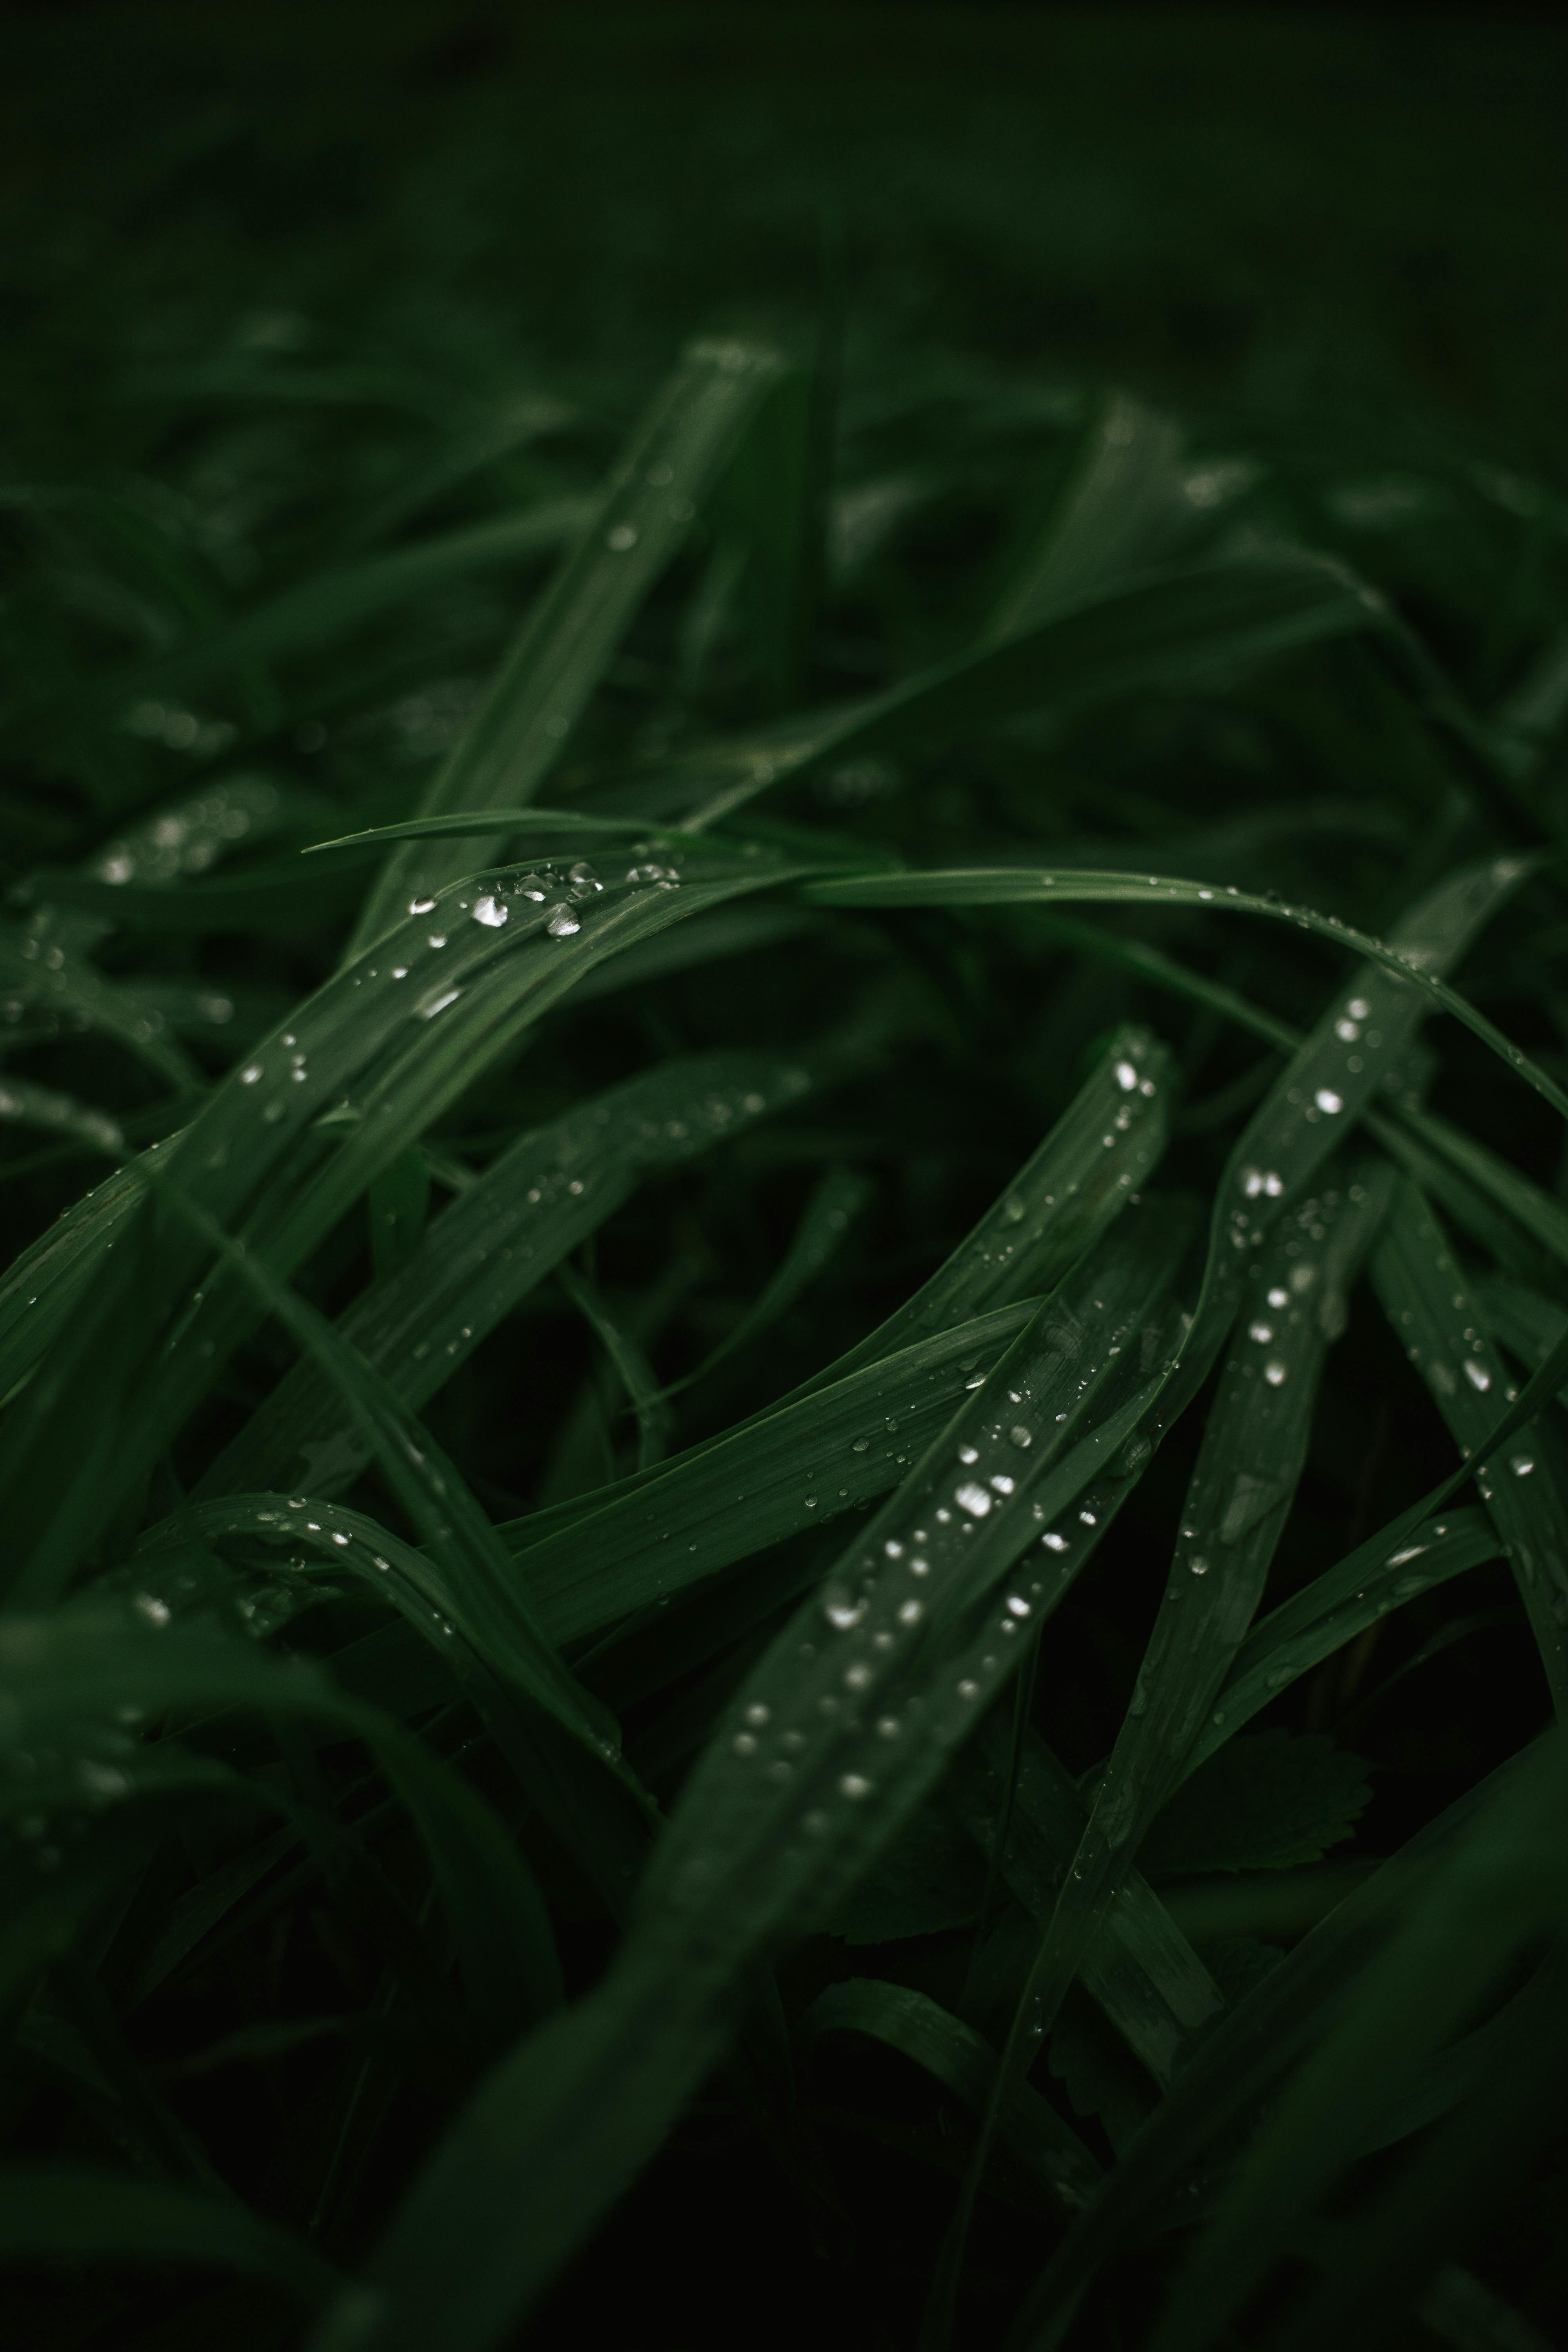 Green Grass at Daytime · Free Stock Photo